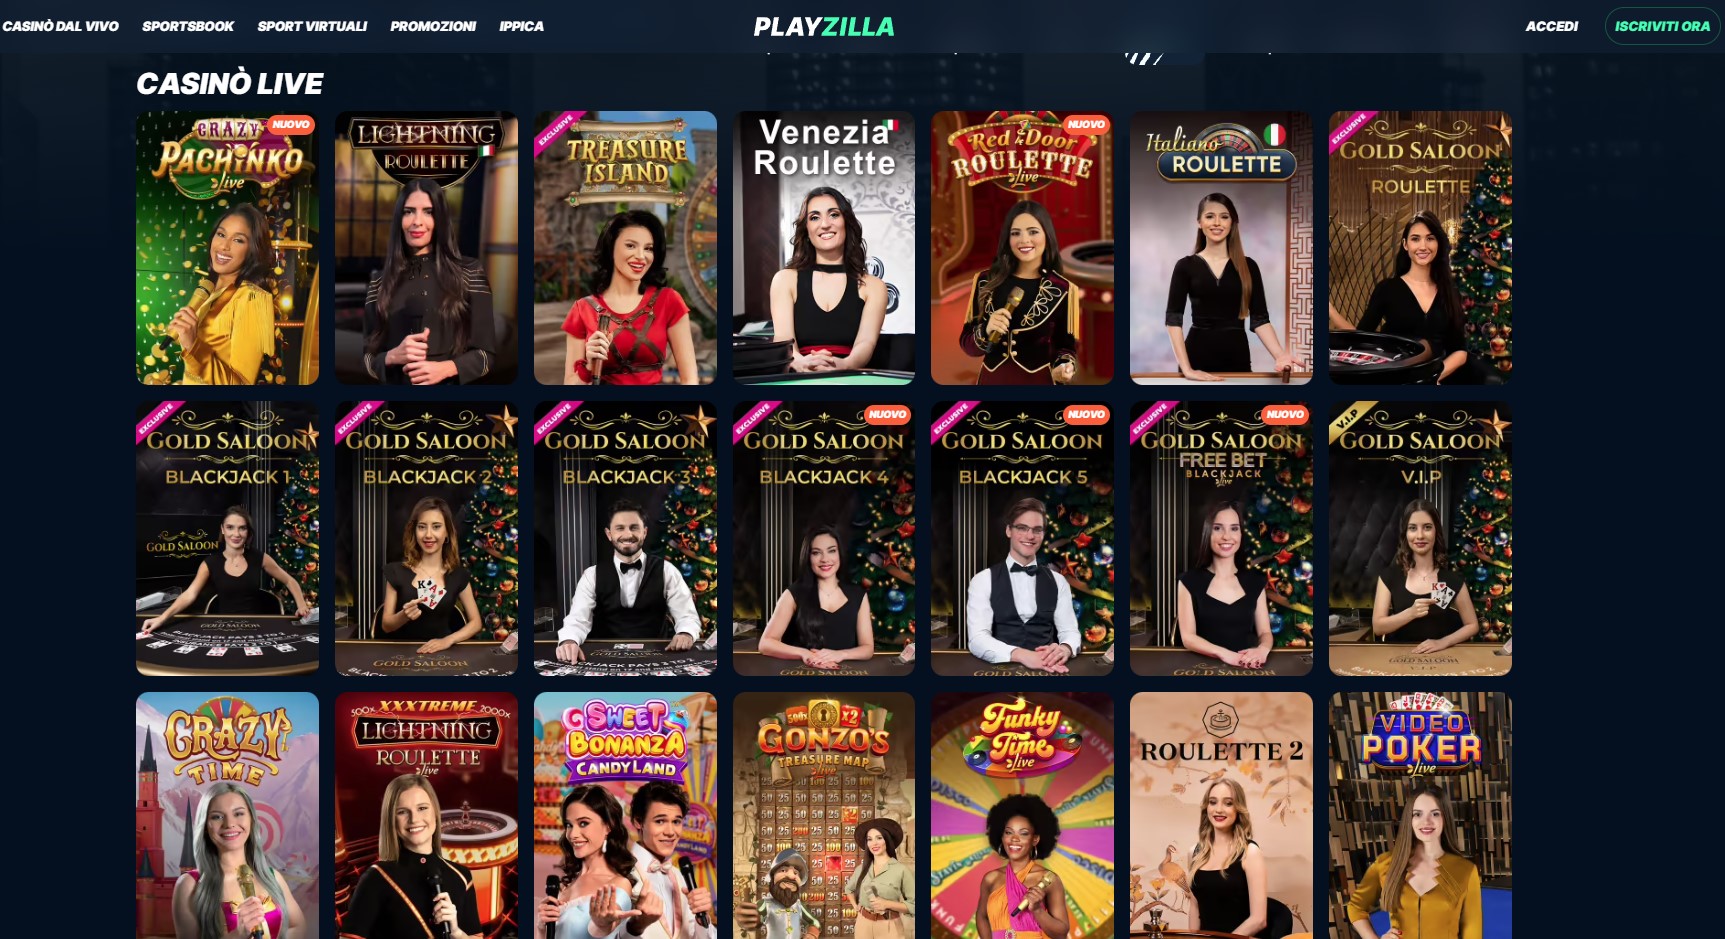 casino online stranieri - playzilla